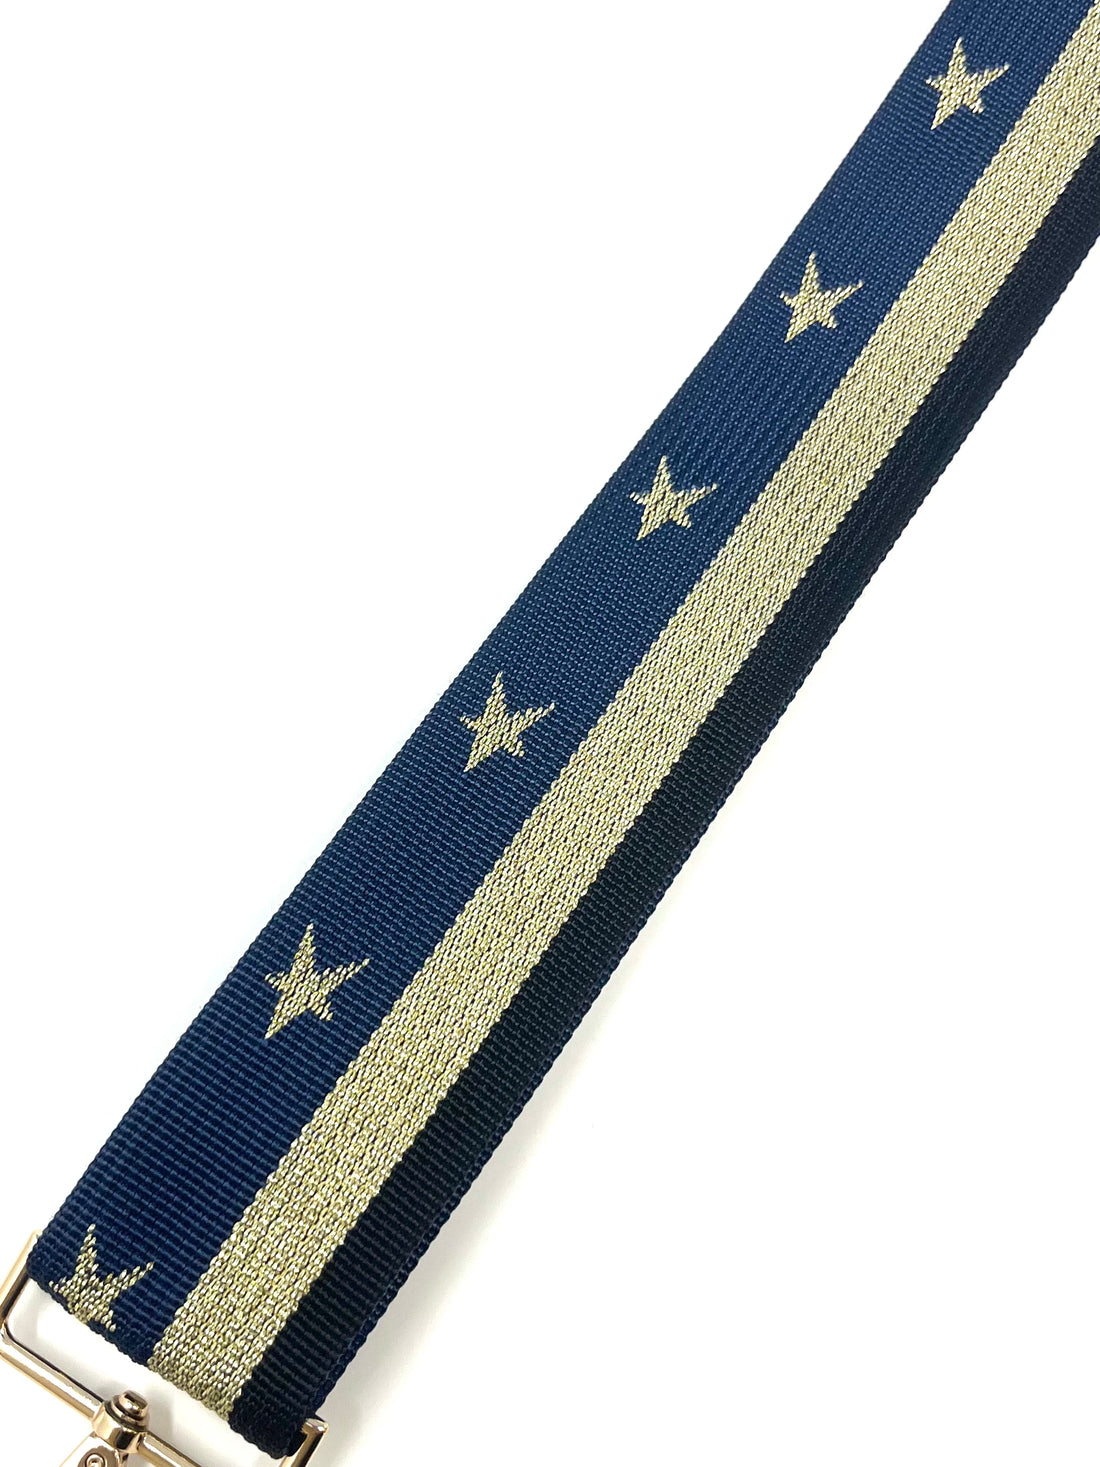 Starlight Strap in Navy